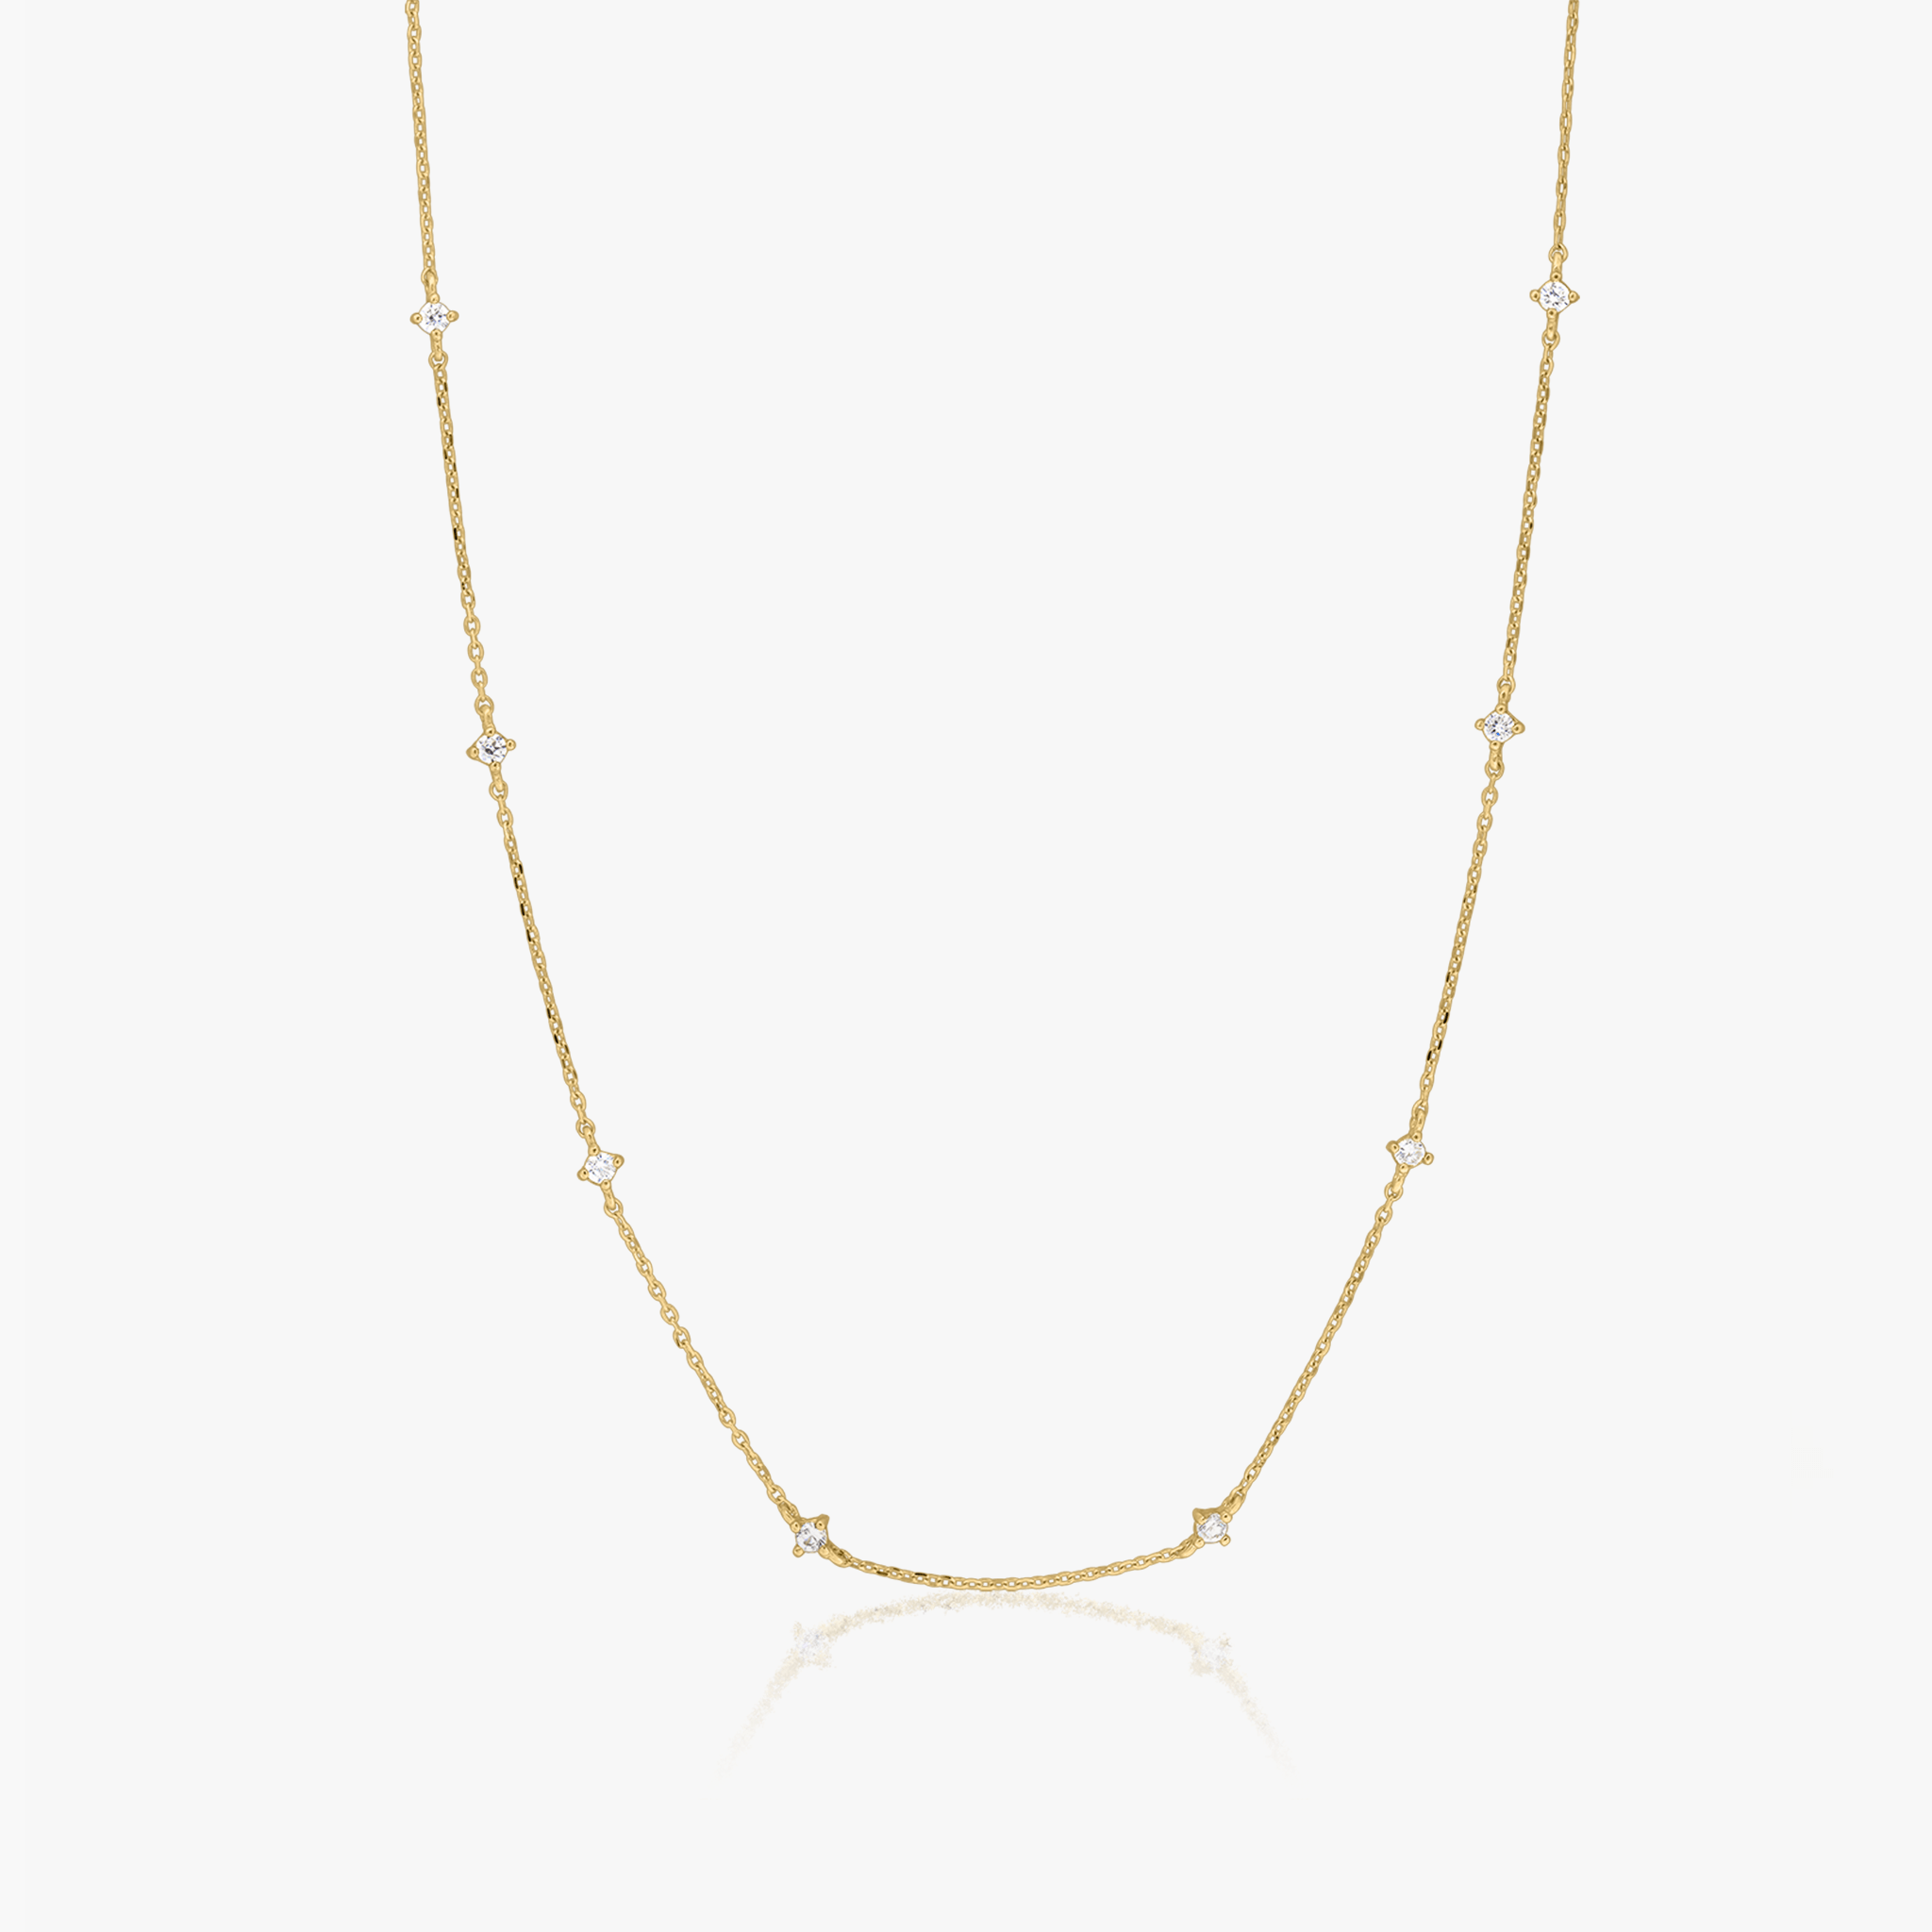 Starburst gold necklace - Zirconium